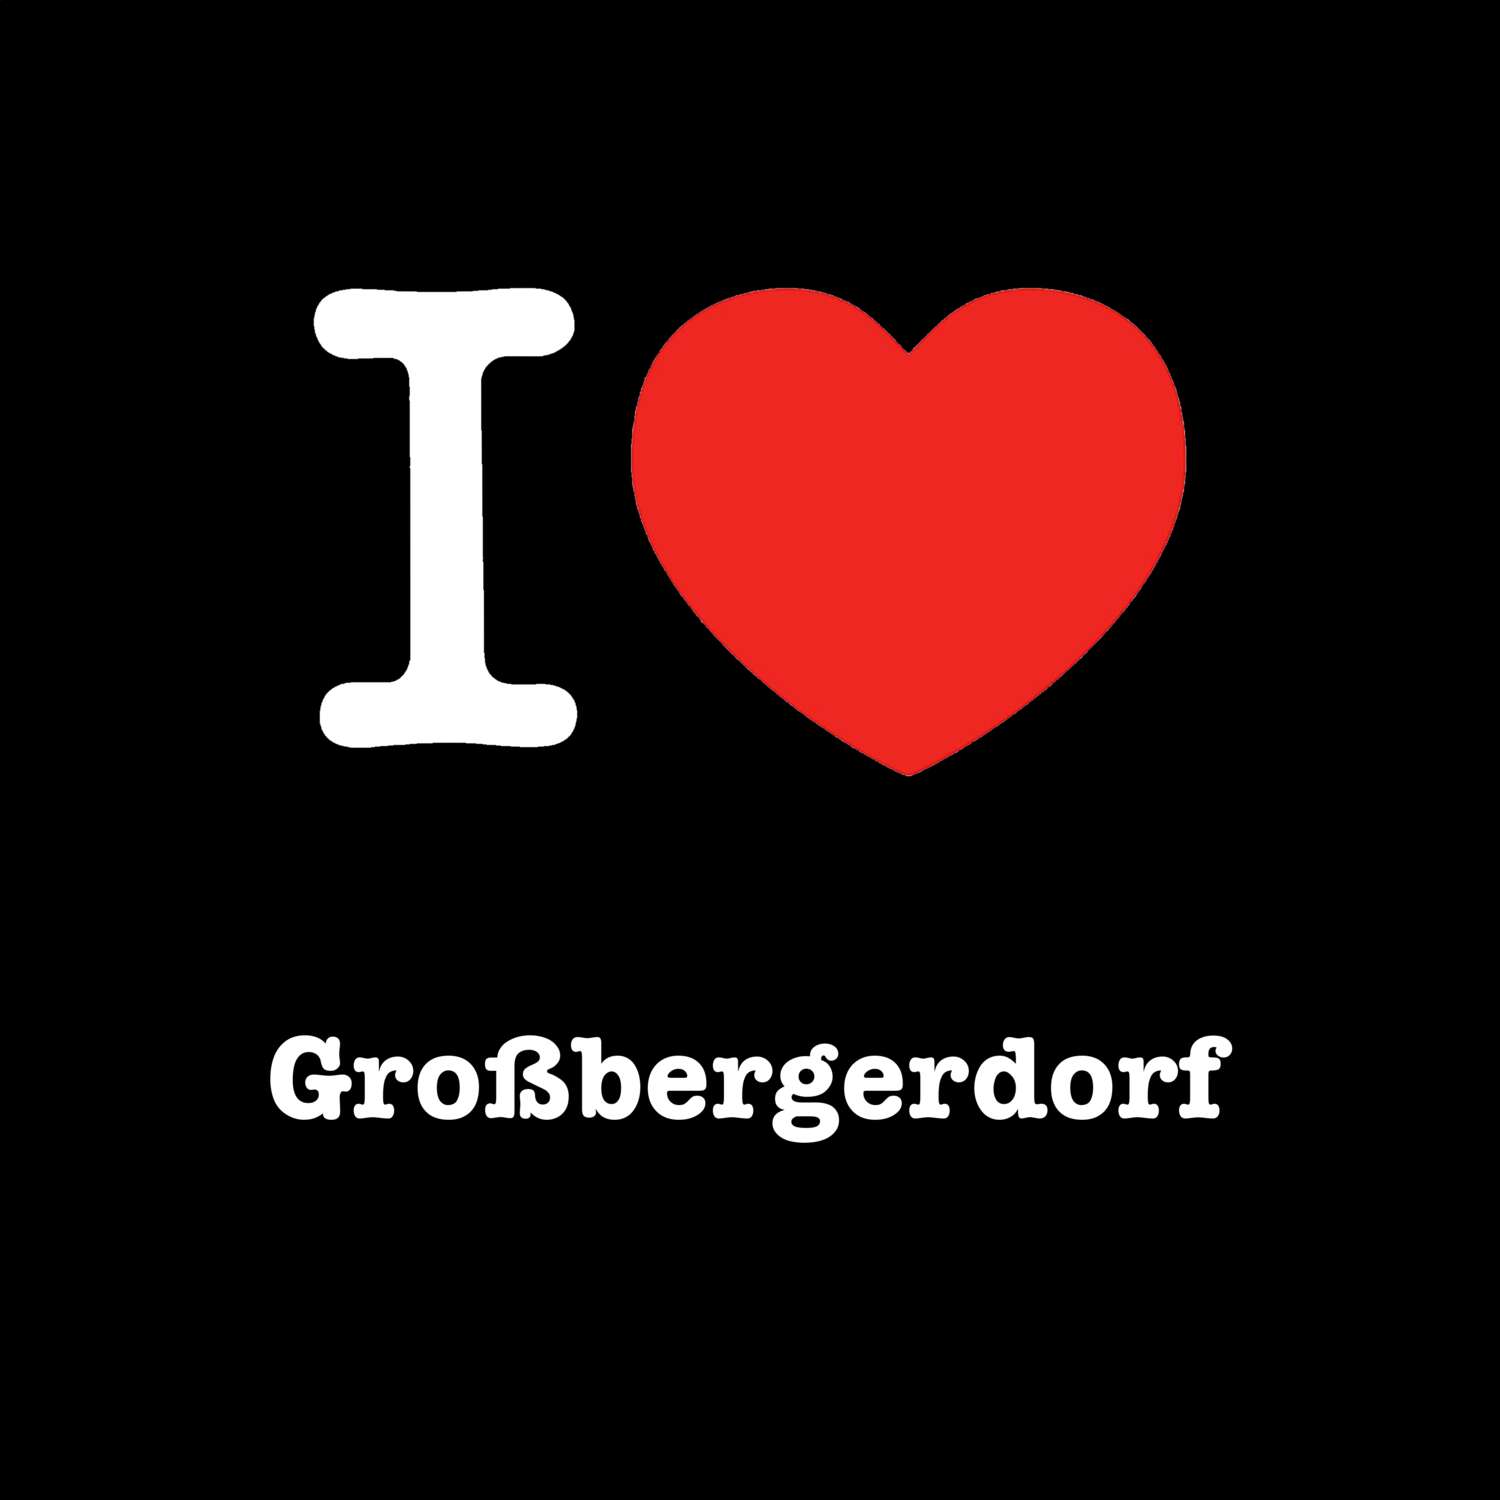 Großbergerdorf T-Shirt »I love«